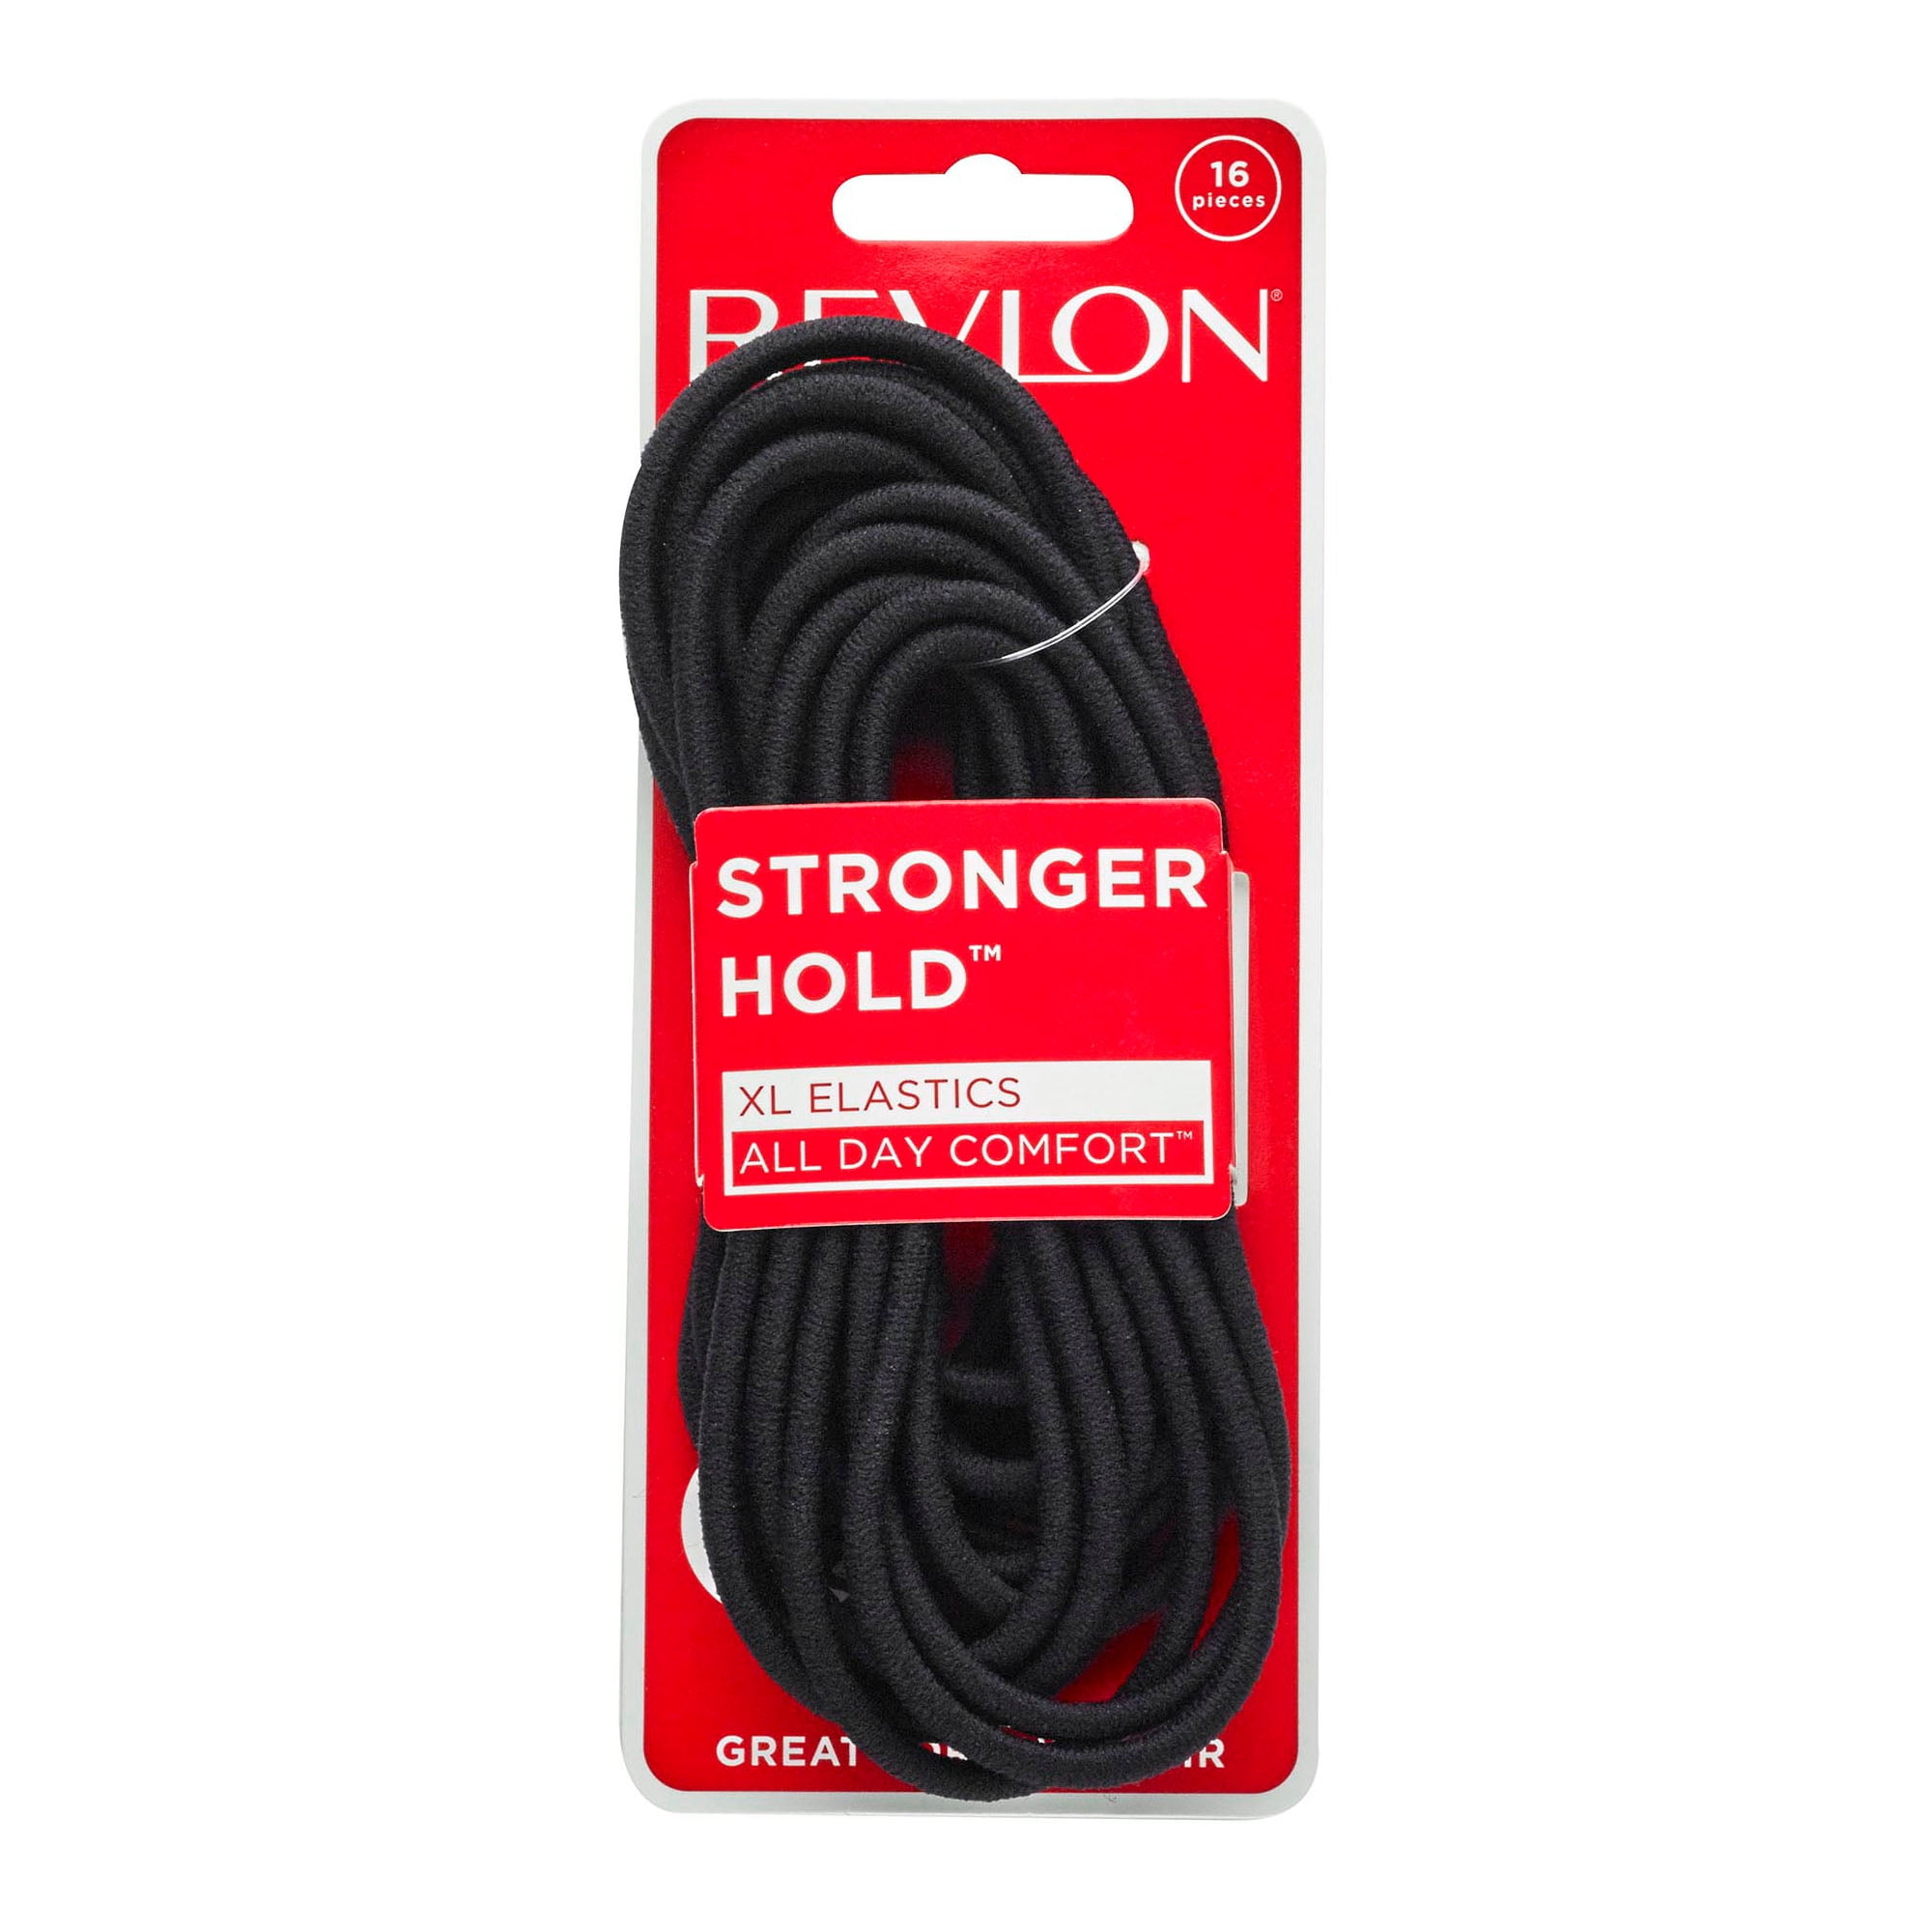  FOMIYES 60 Pcs elastic cord for hair ponytail hooks